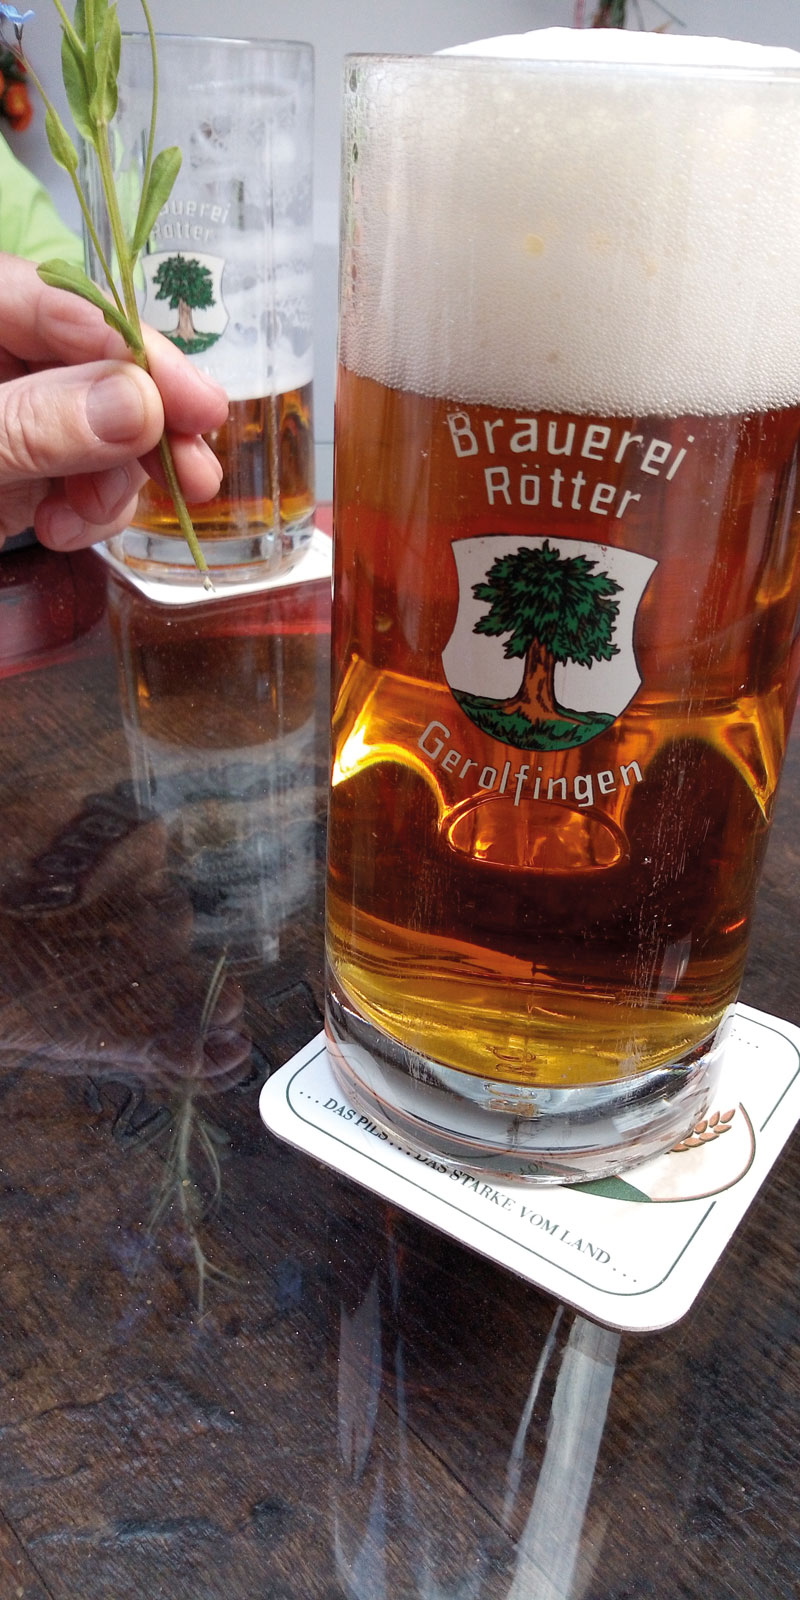 Brauerei Gasthof Rötter - Gerolfingen am Hesselberg